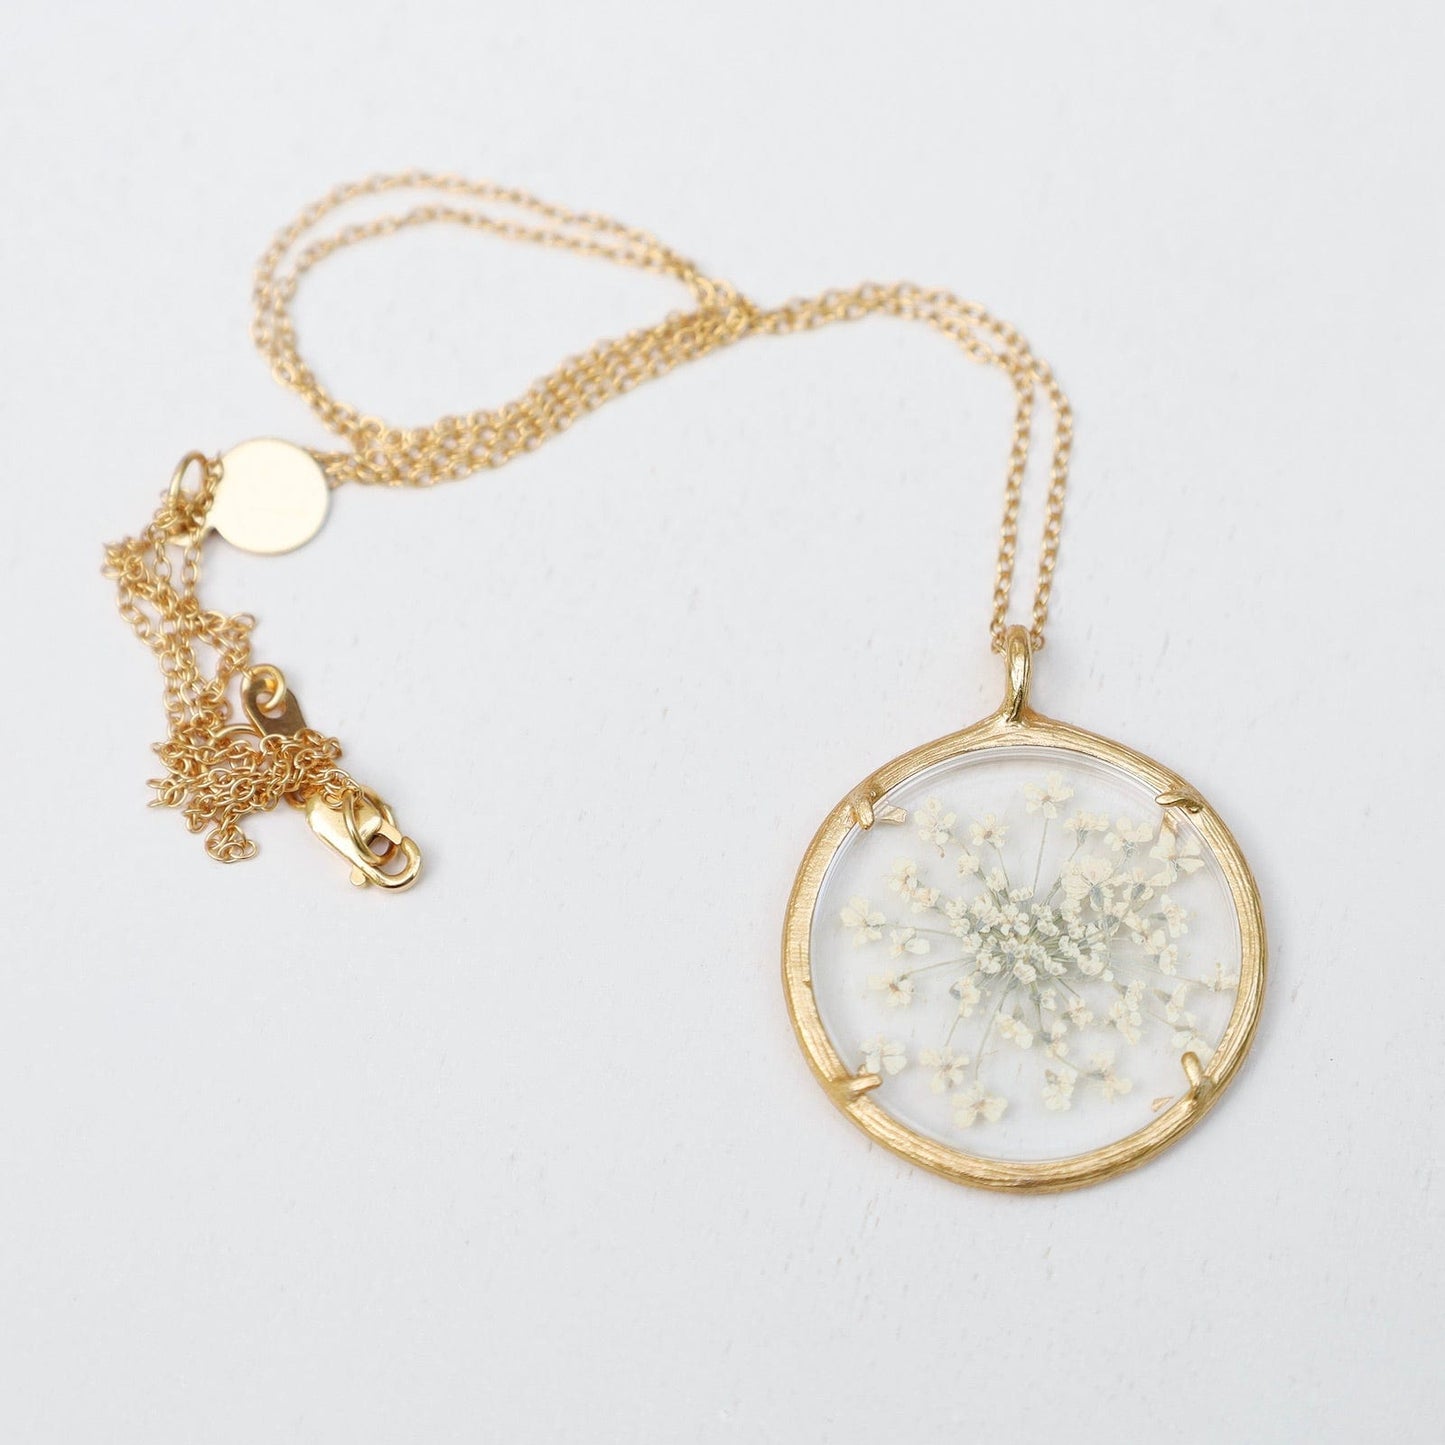 NKL-VRM Queen Anne's Lace Large Glass Botanical Necklace - 18K Gold Vermeil